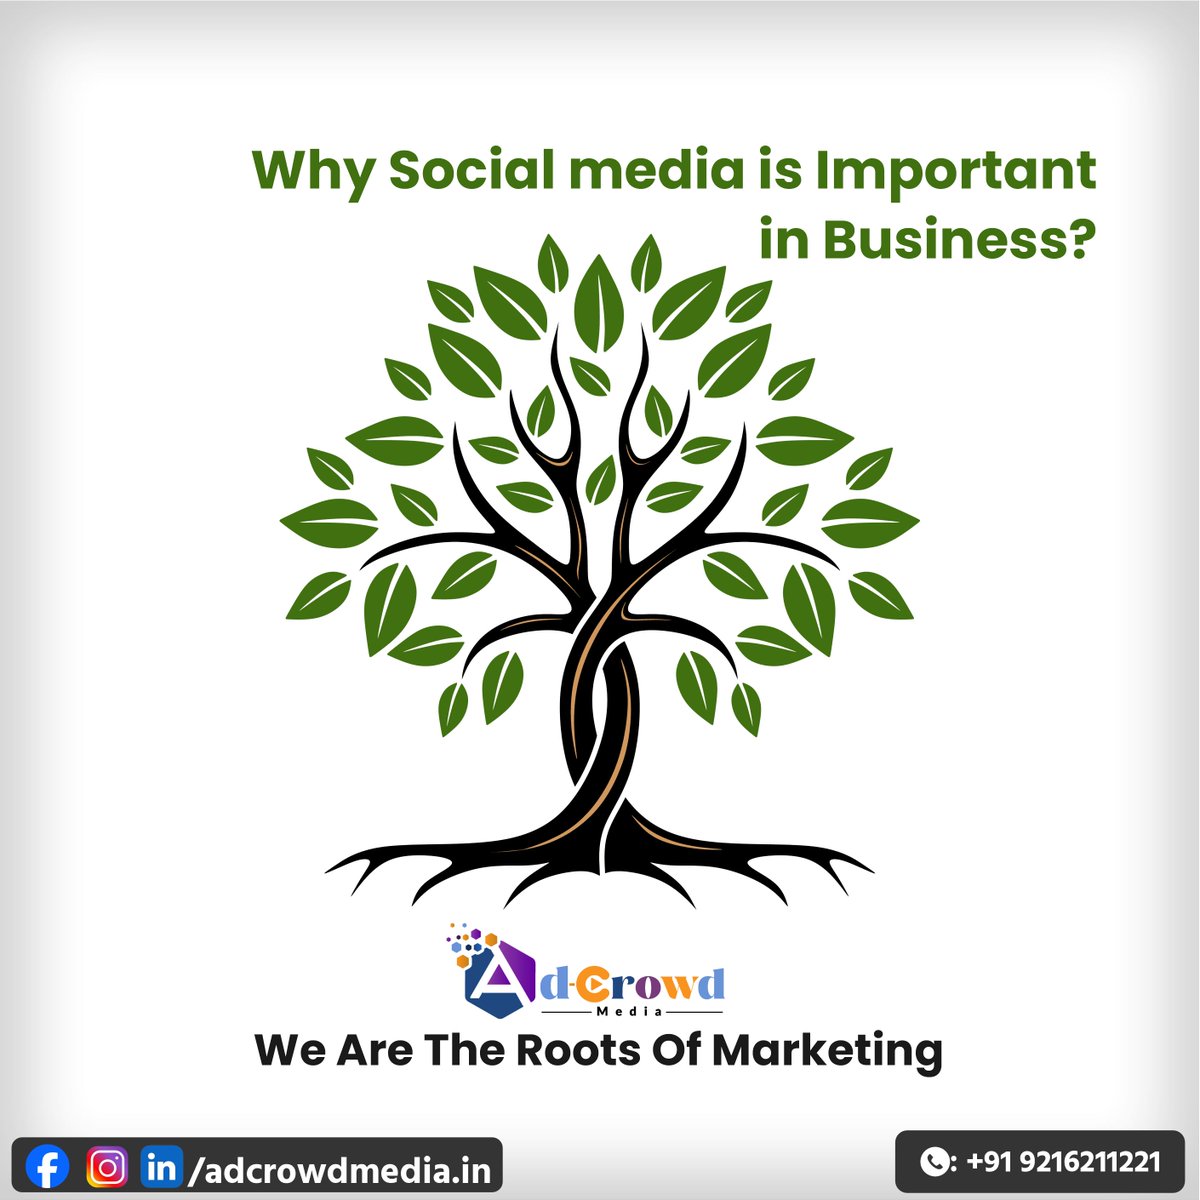 we are the roots of marketing. 

#SEOExperts #MarketingMindset #DataDriven #AdCampaigns #MarketingInnovation #DigitalAgency #MarketingSuccess #SEOTools #ContentCreators #DigitalPresence #MobileOptimization #MarketingPro